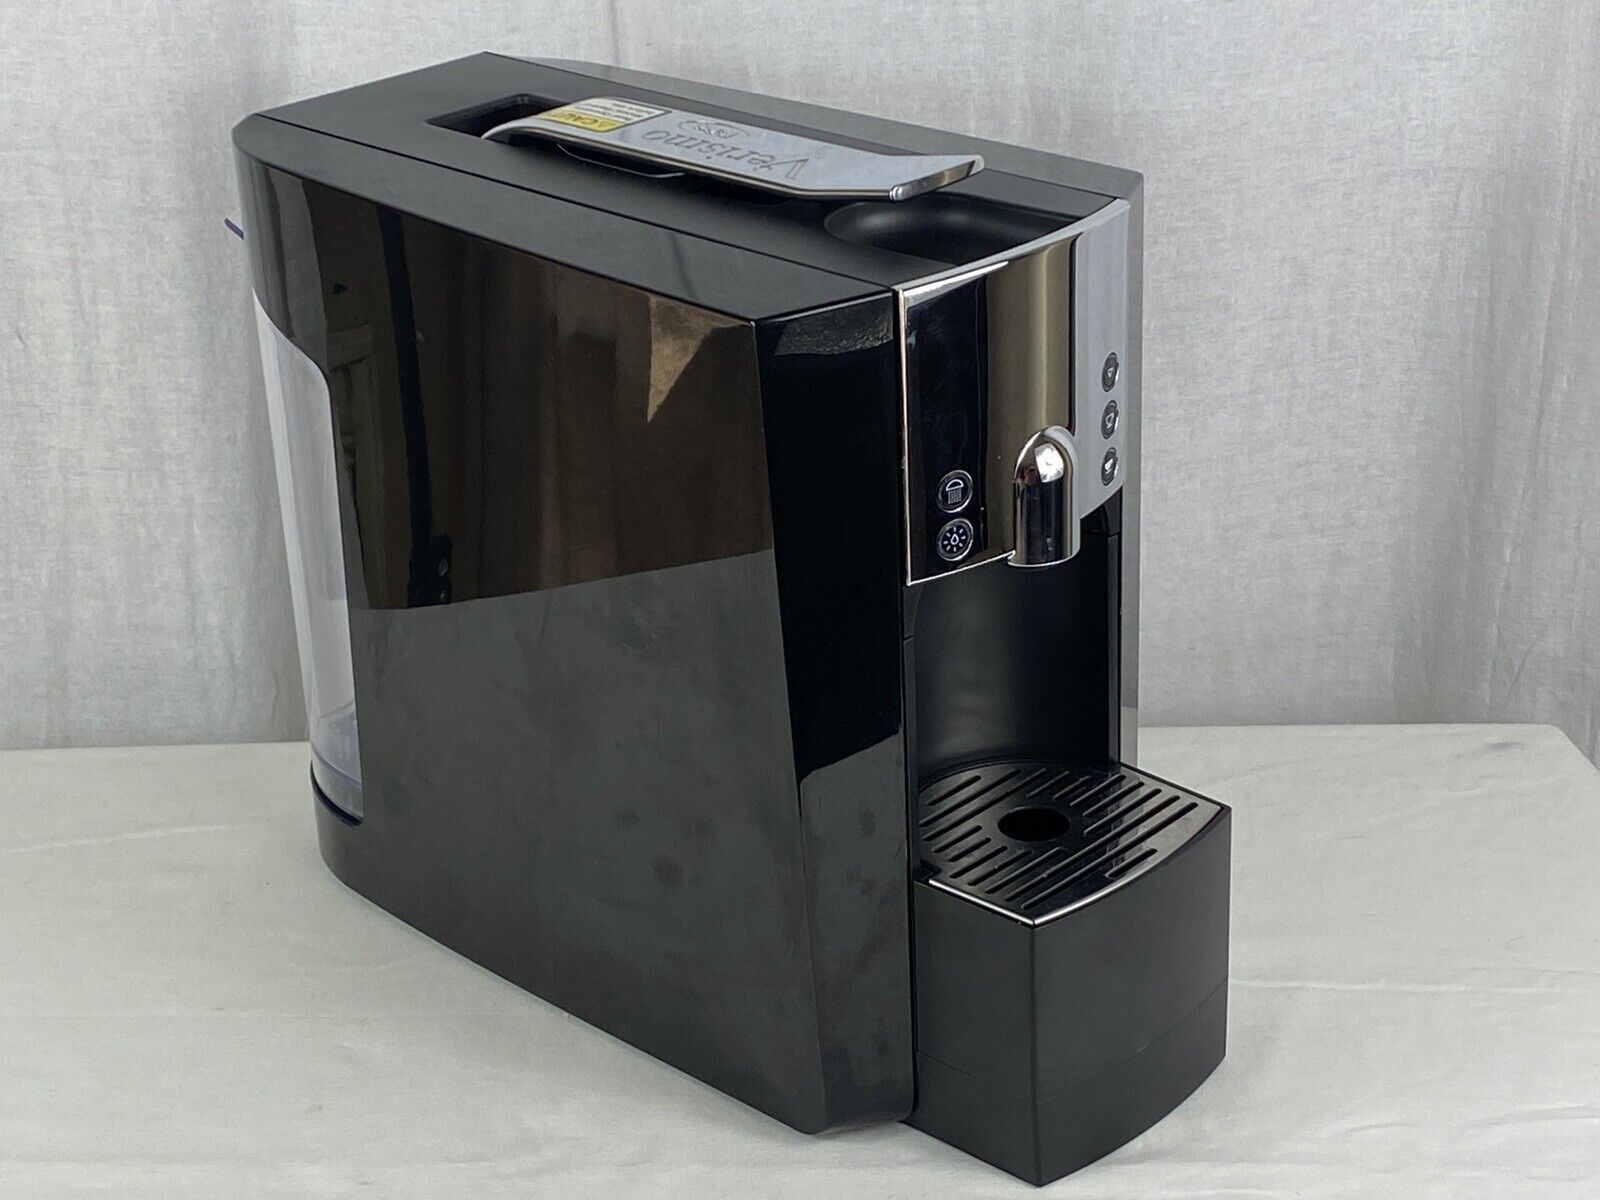 Starbucks Verismo K-fee 12 5P40 Coffee Espresso Machine Maker Black - TESTED!!!! - $44.55